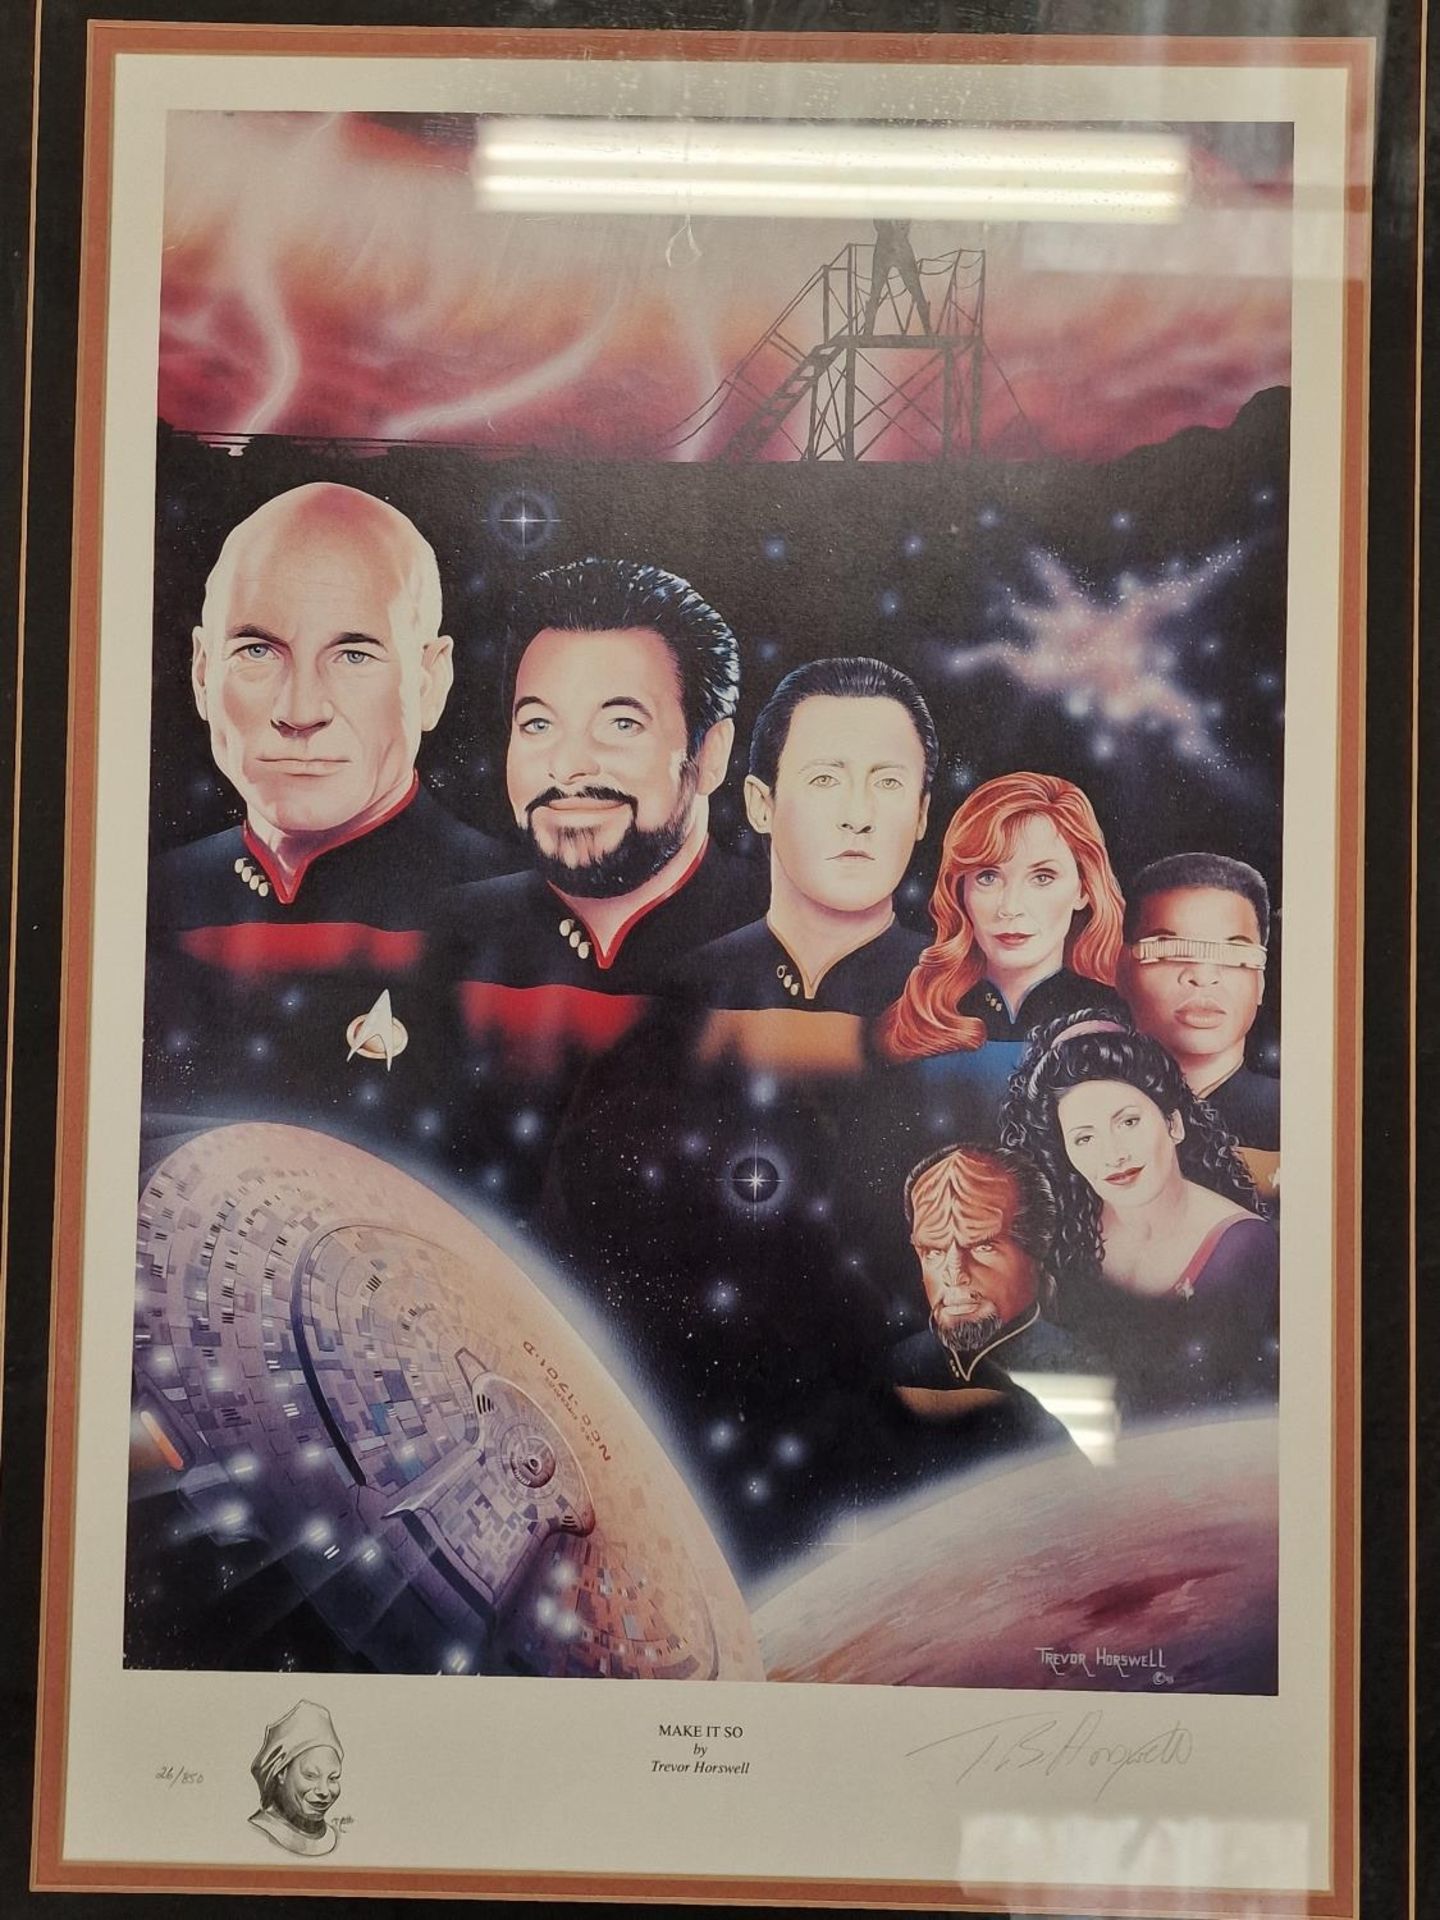 Two framed and glazed Trevor Horsewell Star Trek prints "Former Glory" and "Make It So". - Image 2 of 3